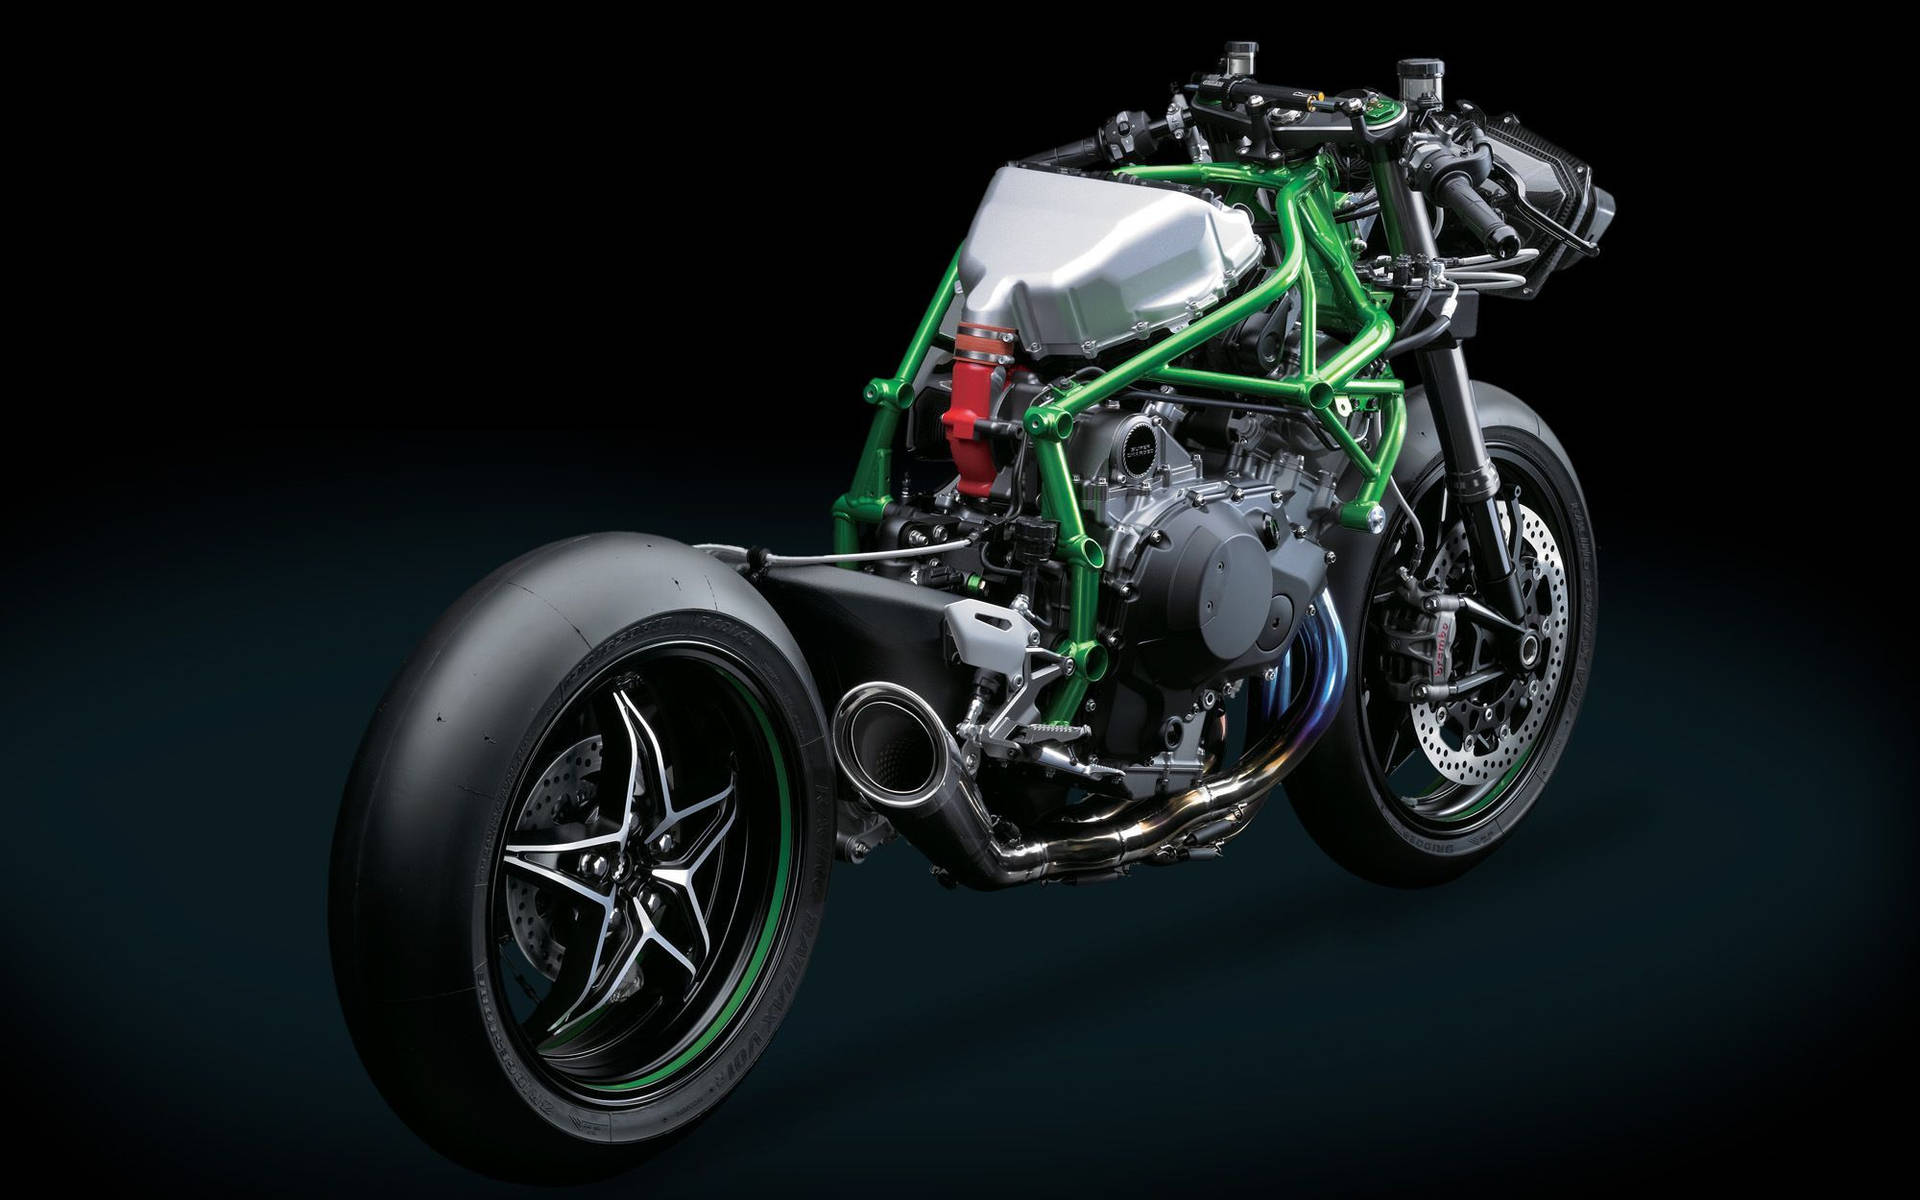 Kawasaki Unveils The Ninja H2r